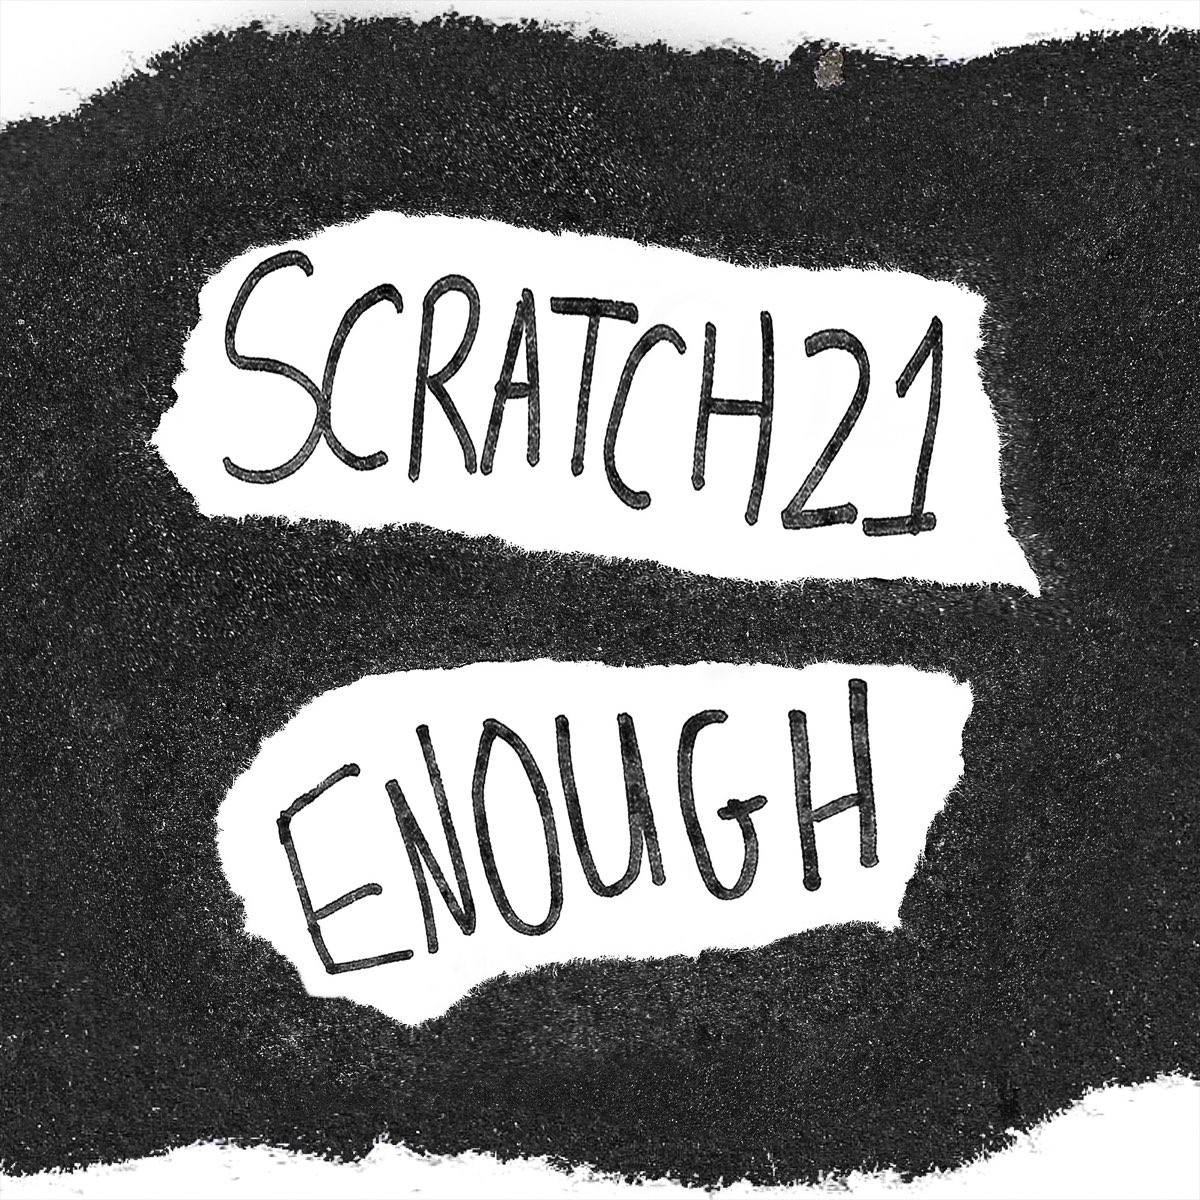 Enough трек. Scratch21. Enough 21 своич. Cooper Mathers Scratch 21.